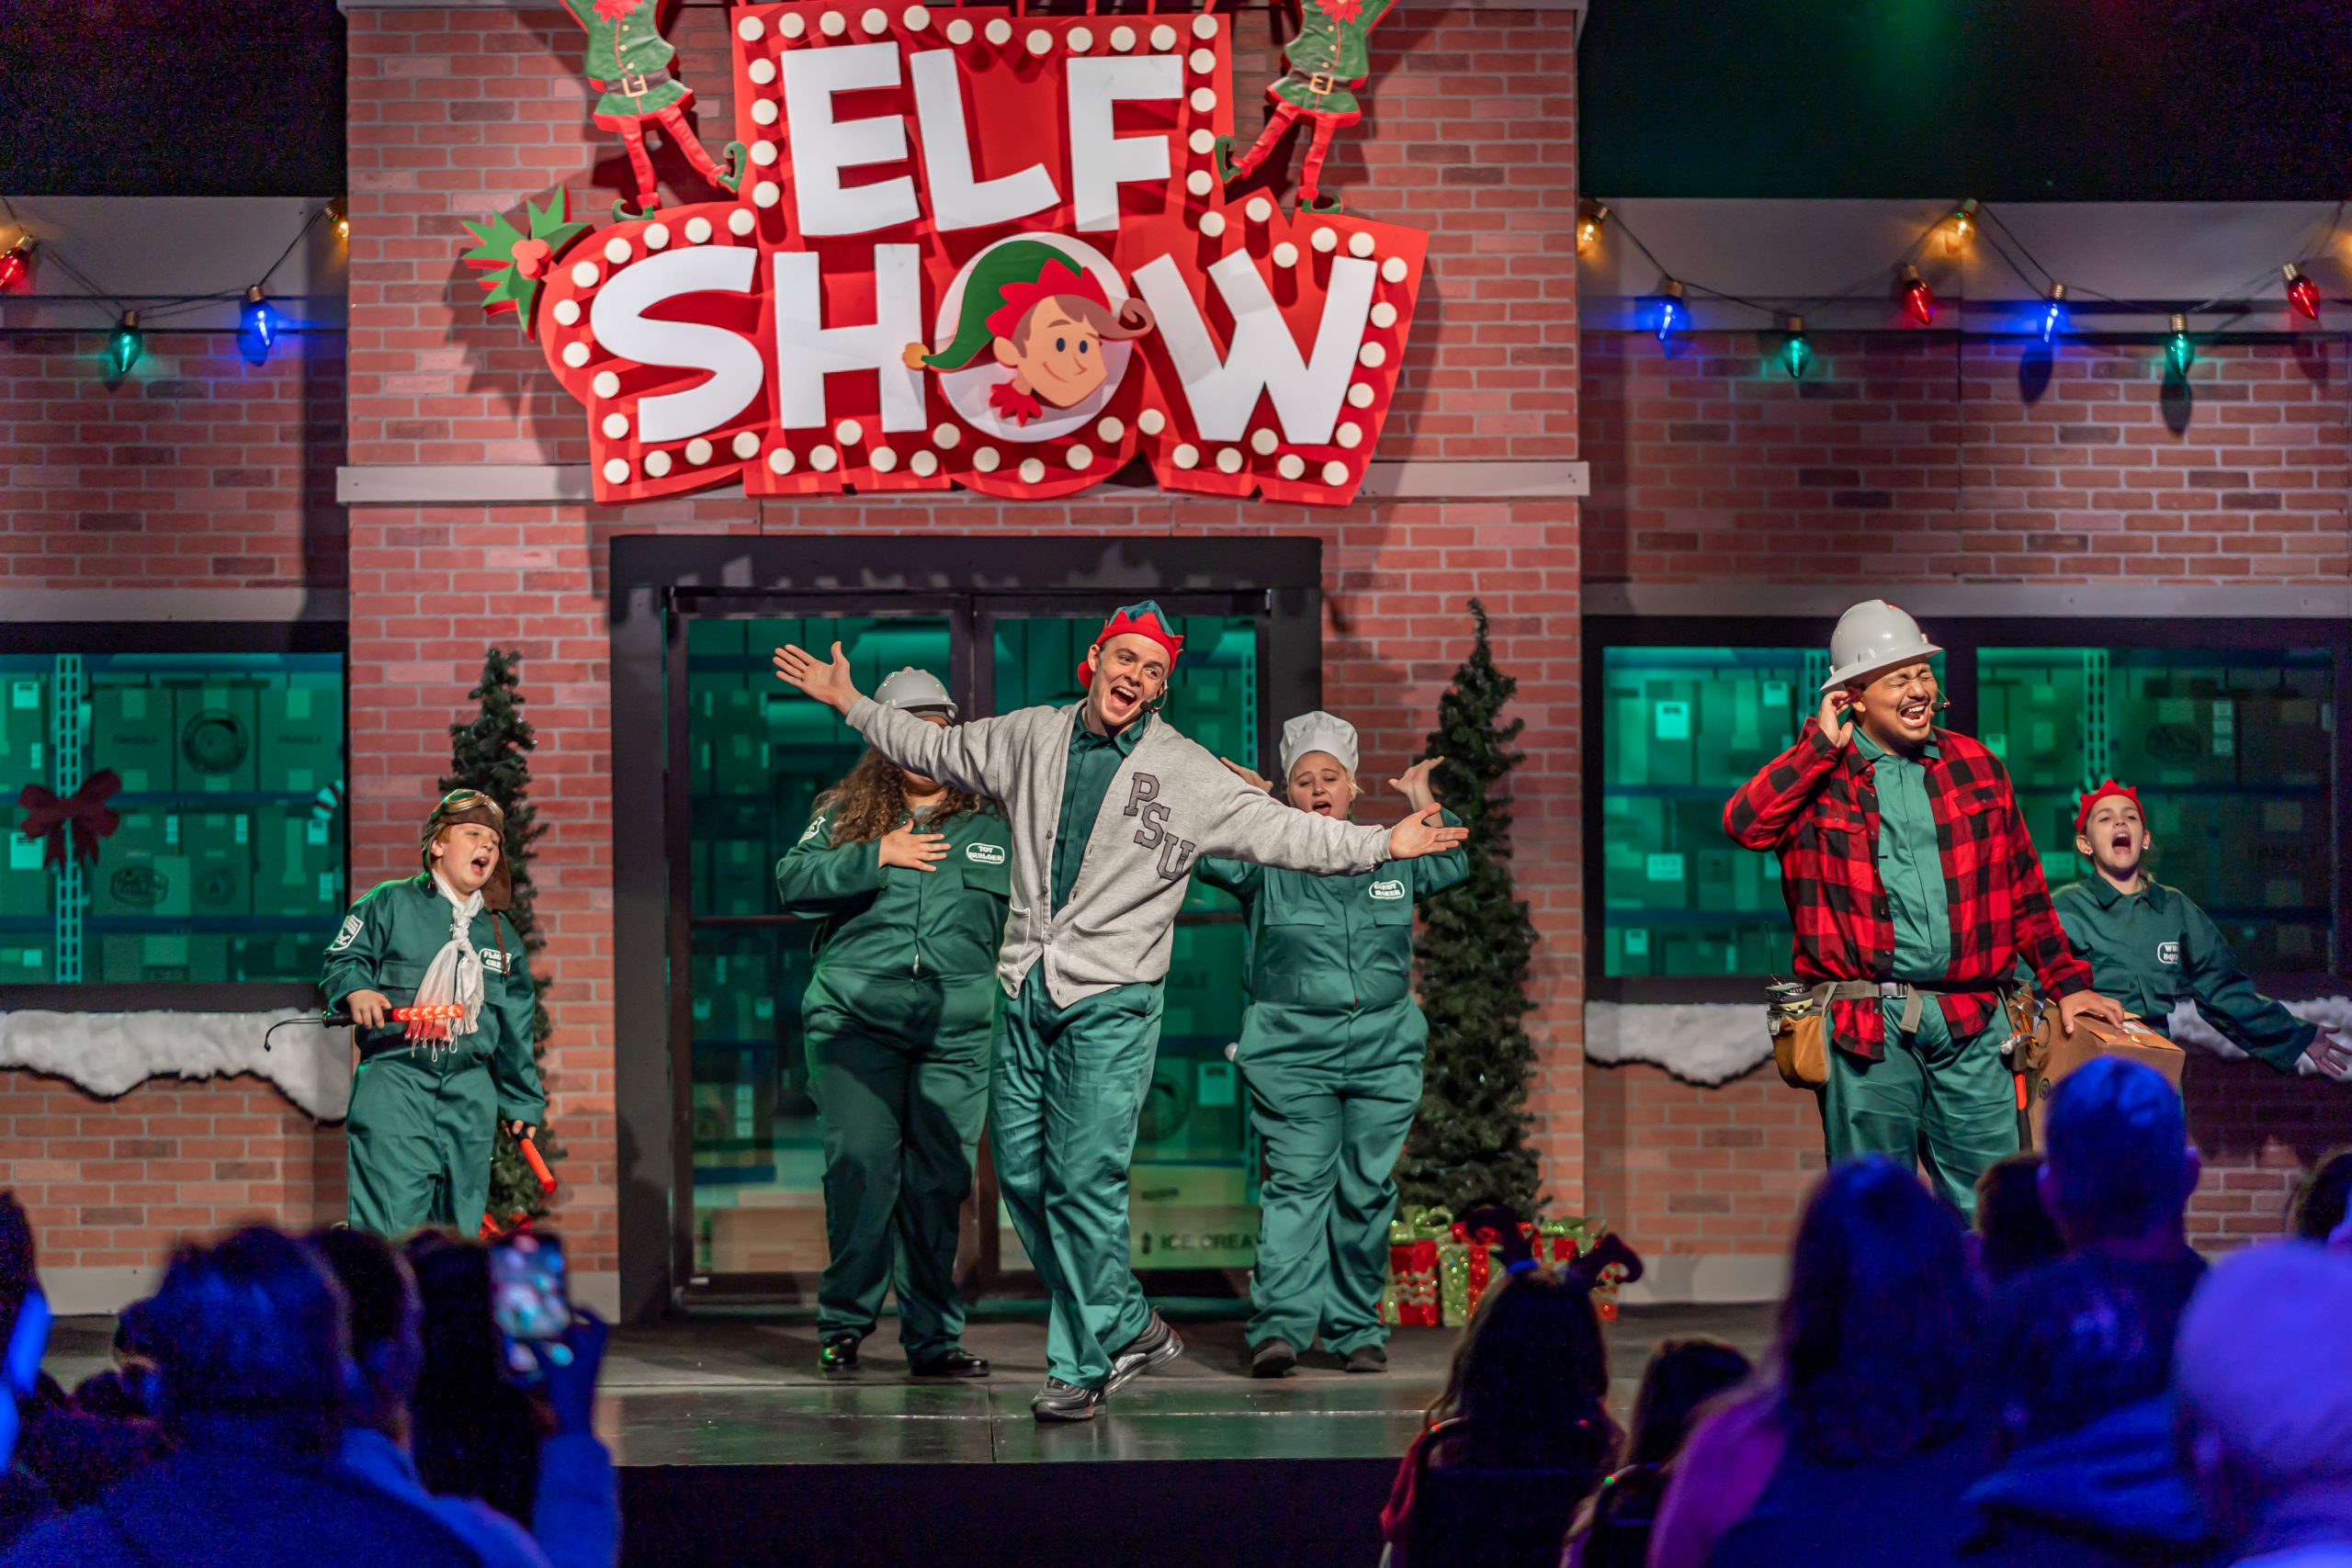 Elf Show